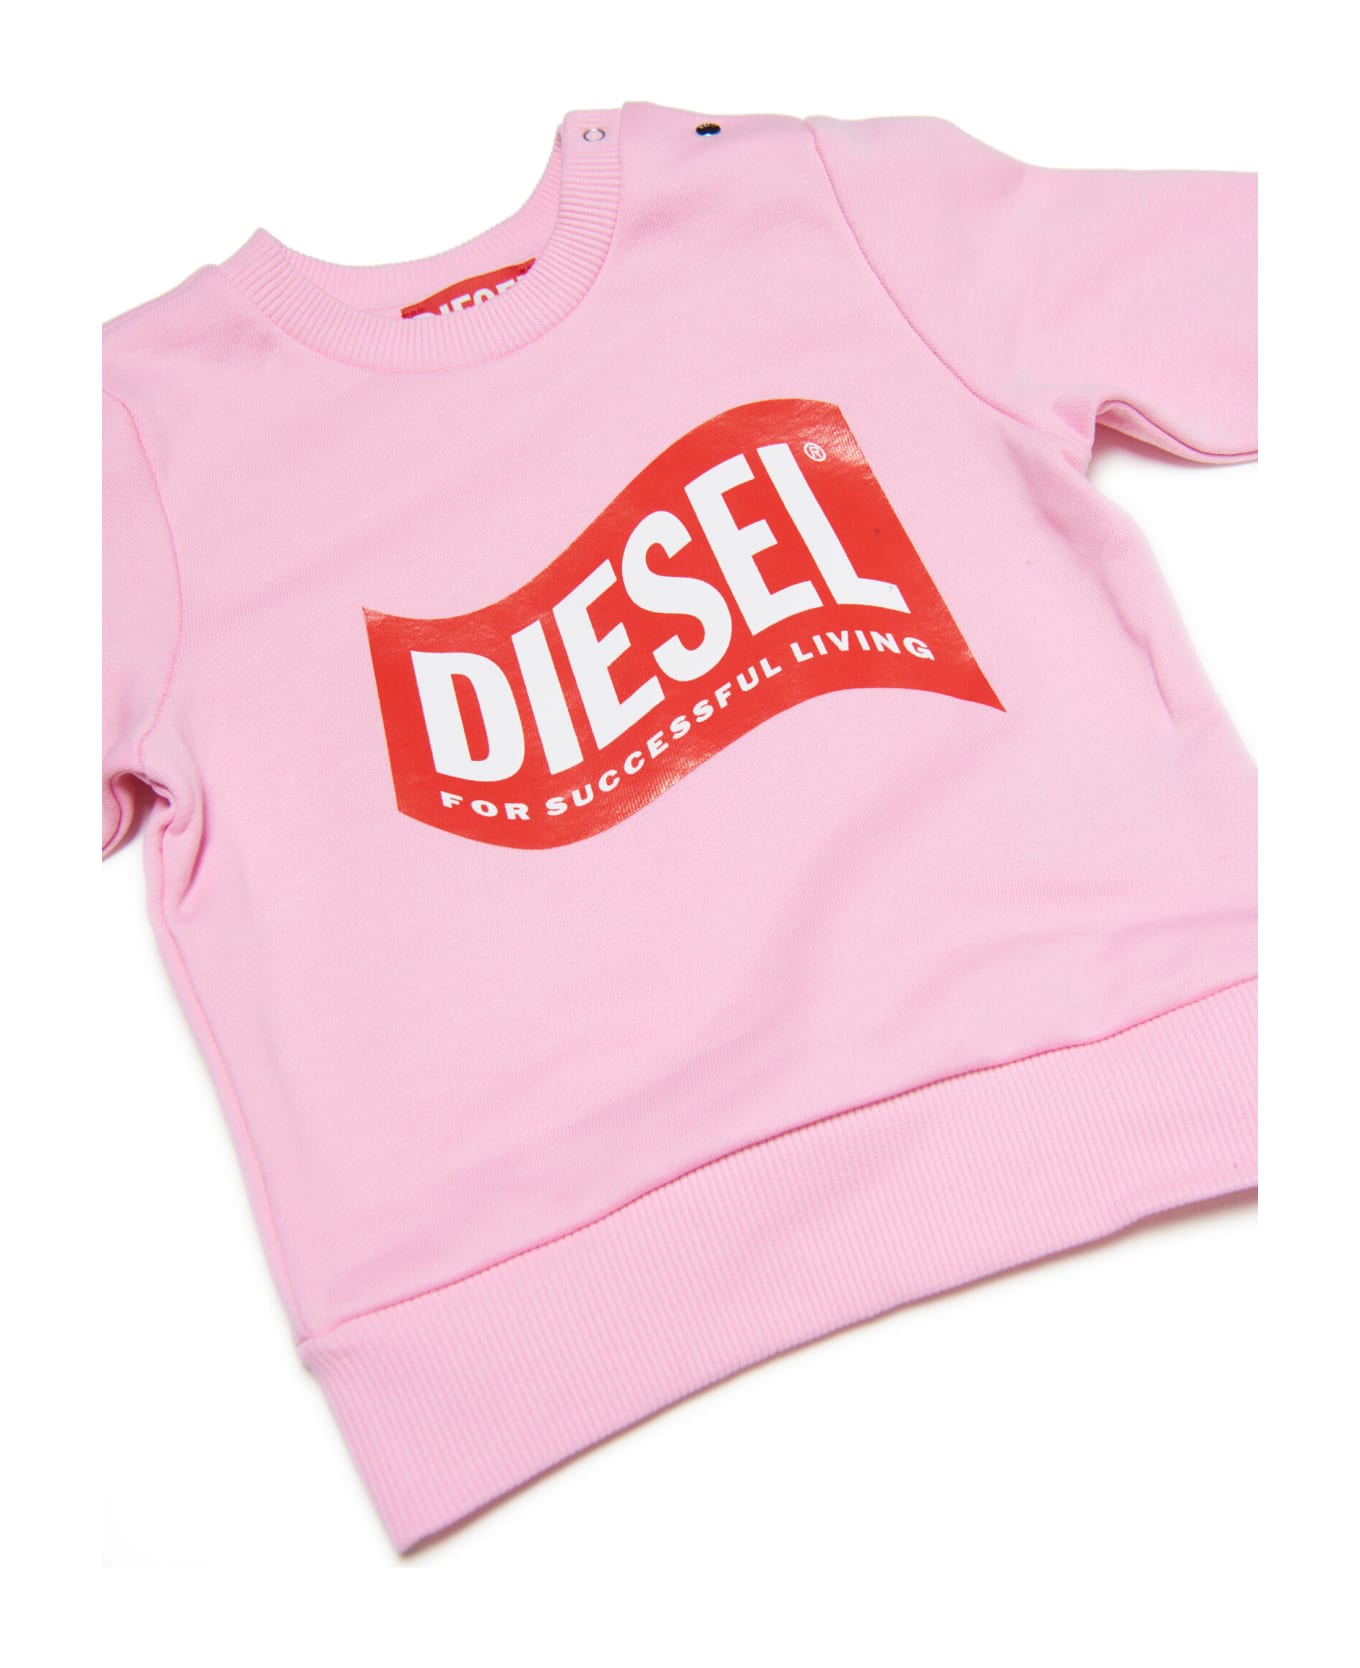 Diesel Suitannyb-set Overalls Diesel Pastel Pink Jumpsuit With 'wave' Logo - Pastel pink